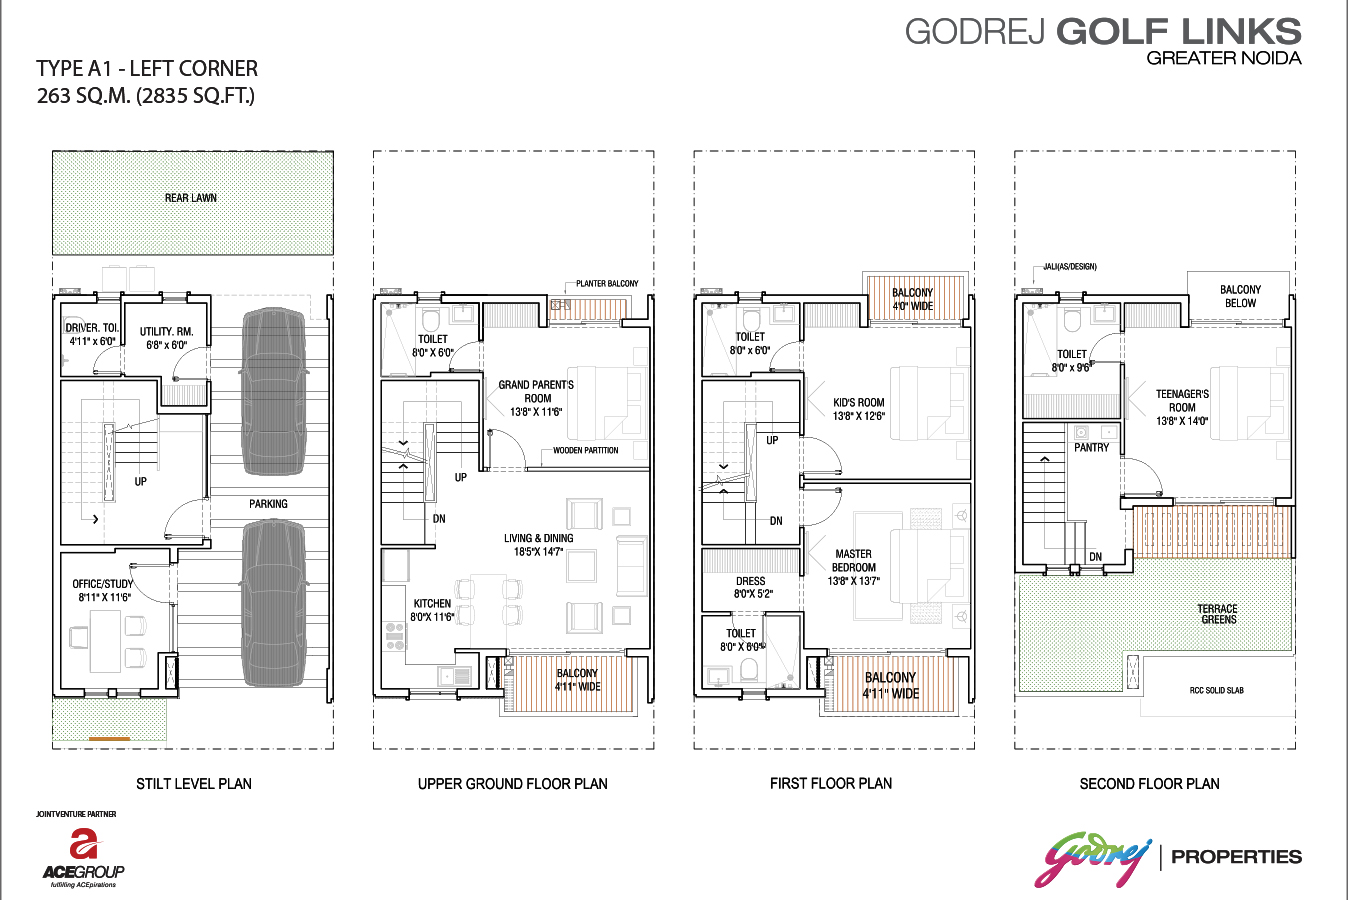 Godrej Crest Villas type-A1 Left Corner 2835 sqft